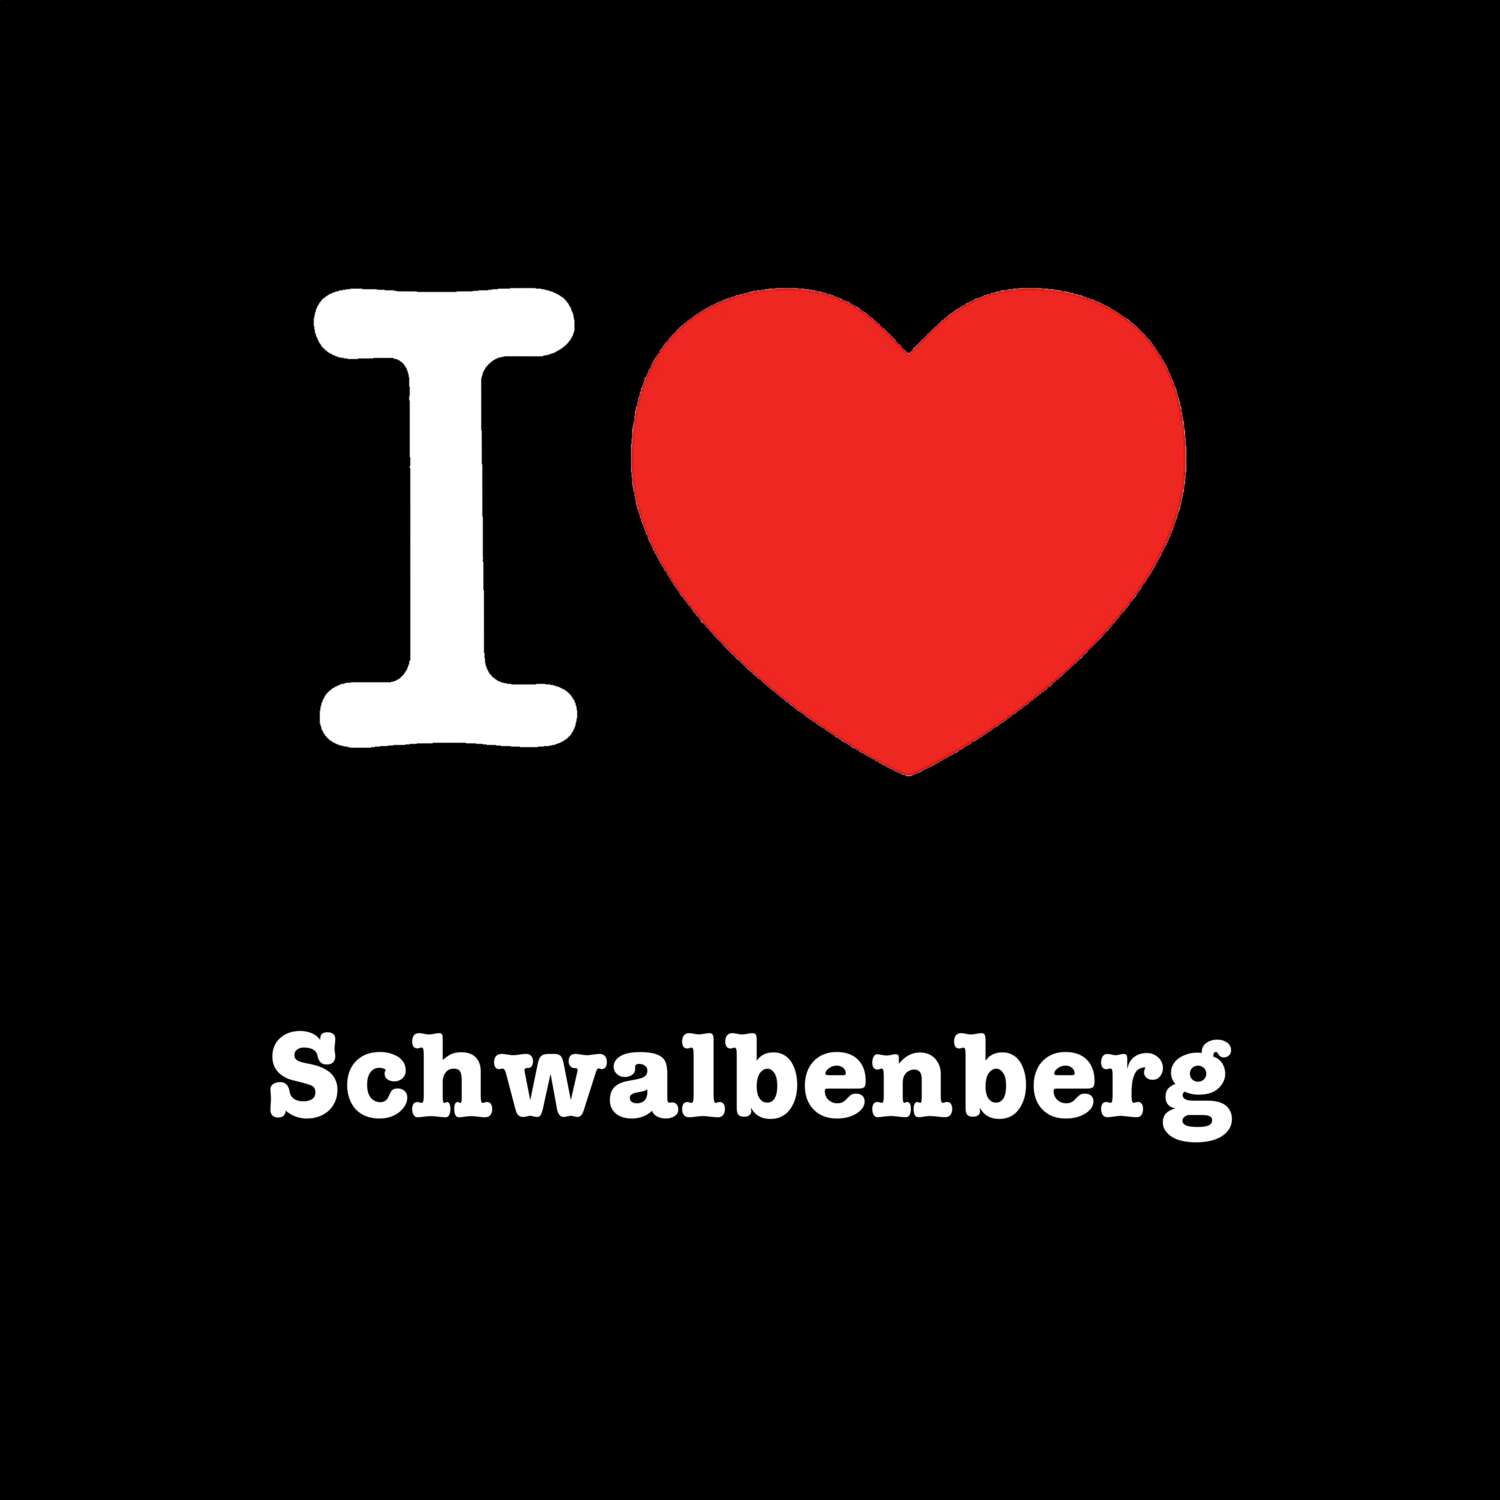 Schwalbenberg T-Shirt »I love«